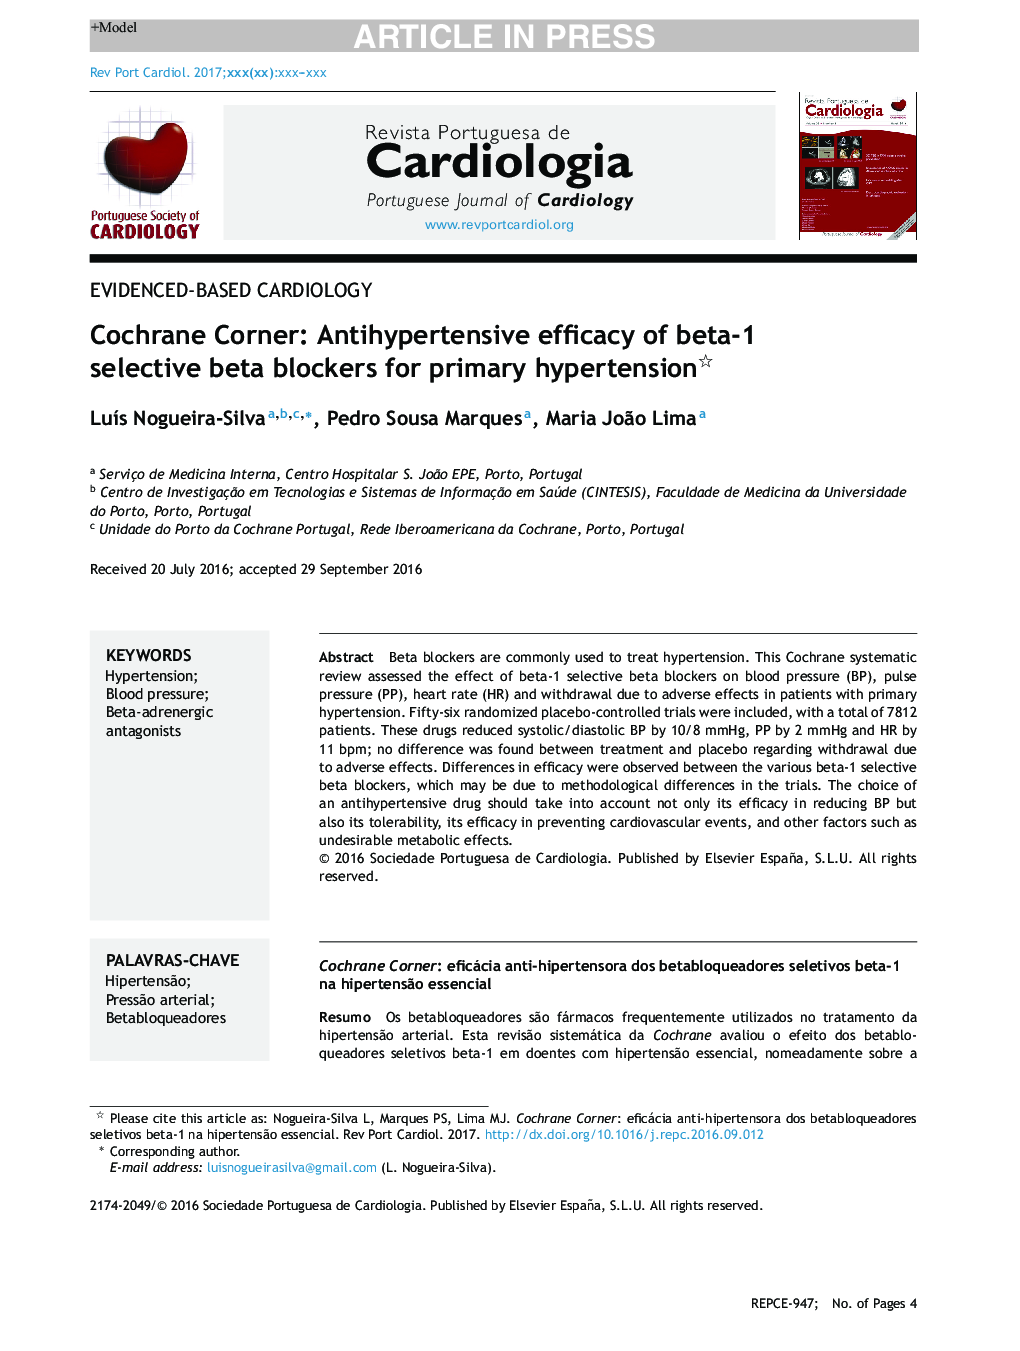 Cochrane Corner: Antihypertensive efficacy of beta-1 selective beta blockers for primary hypertension